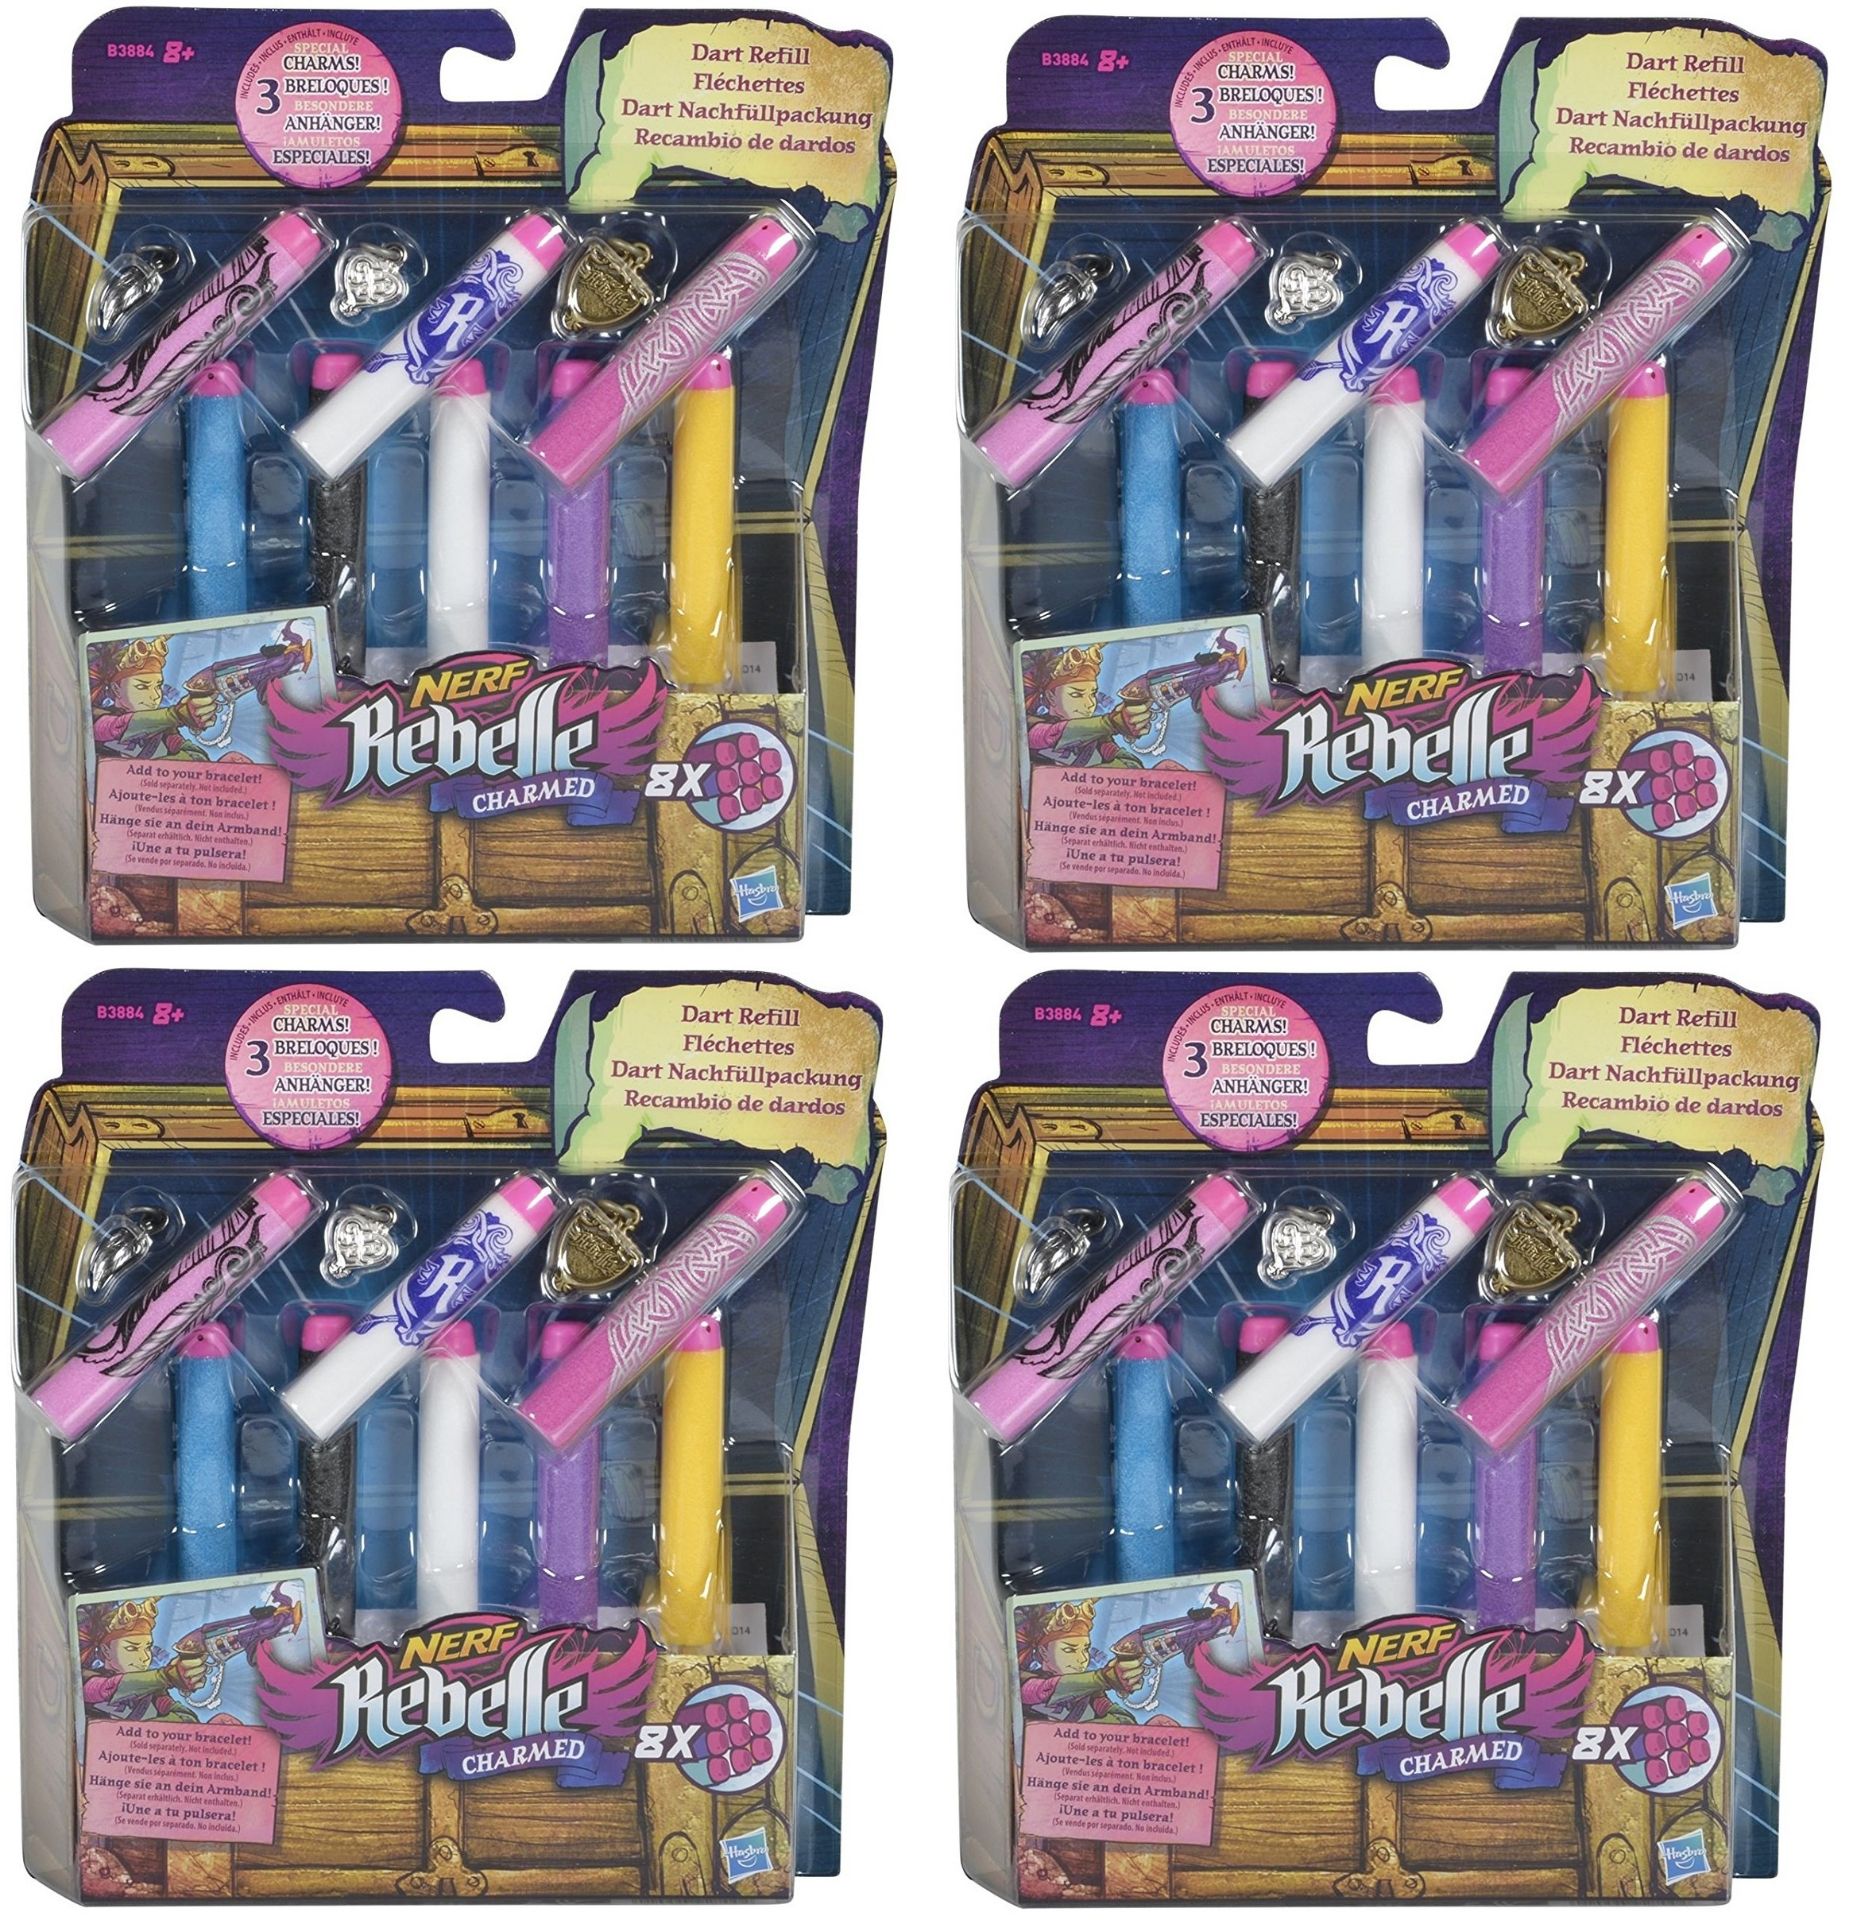 V Brand New 4 Packs Of Nerf Rebelle Charmed 8x Dart Refills With 3 Charms For Your Bracelet - RRP